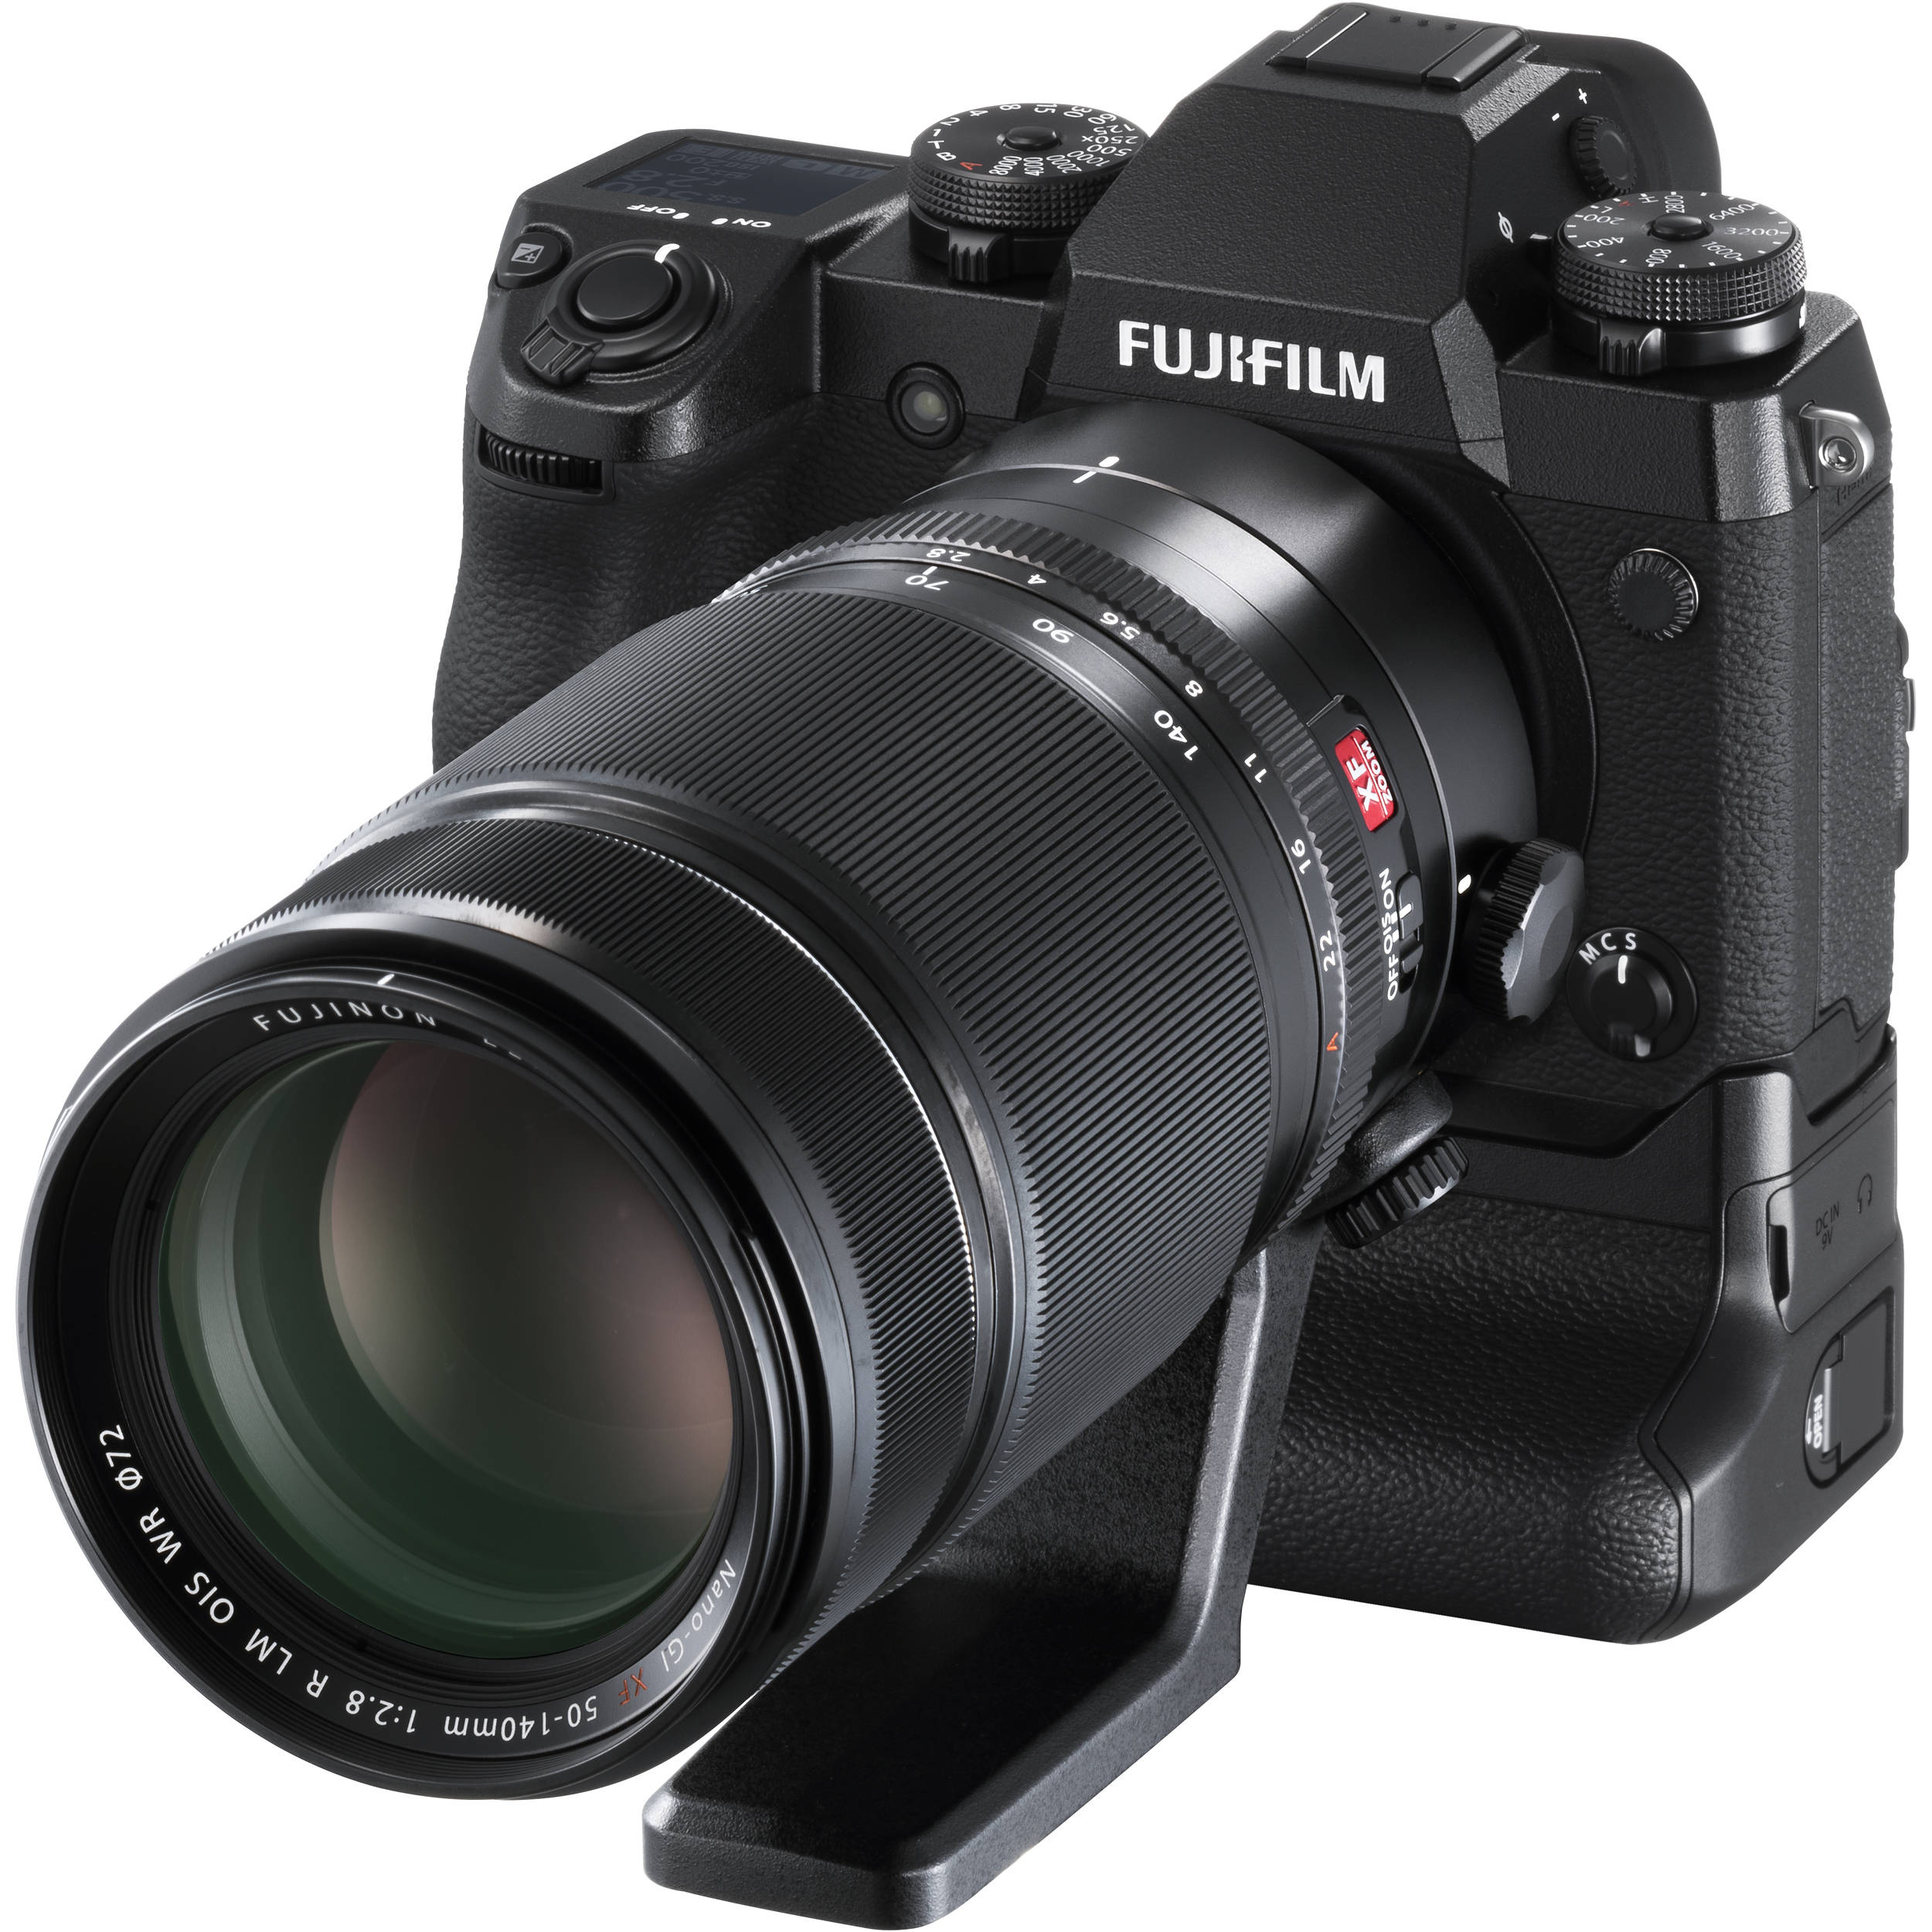 Le X-H1 Fujifilm, c’est du solide.